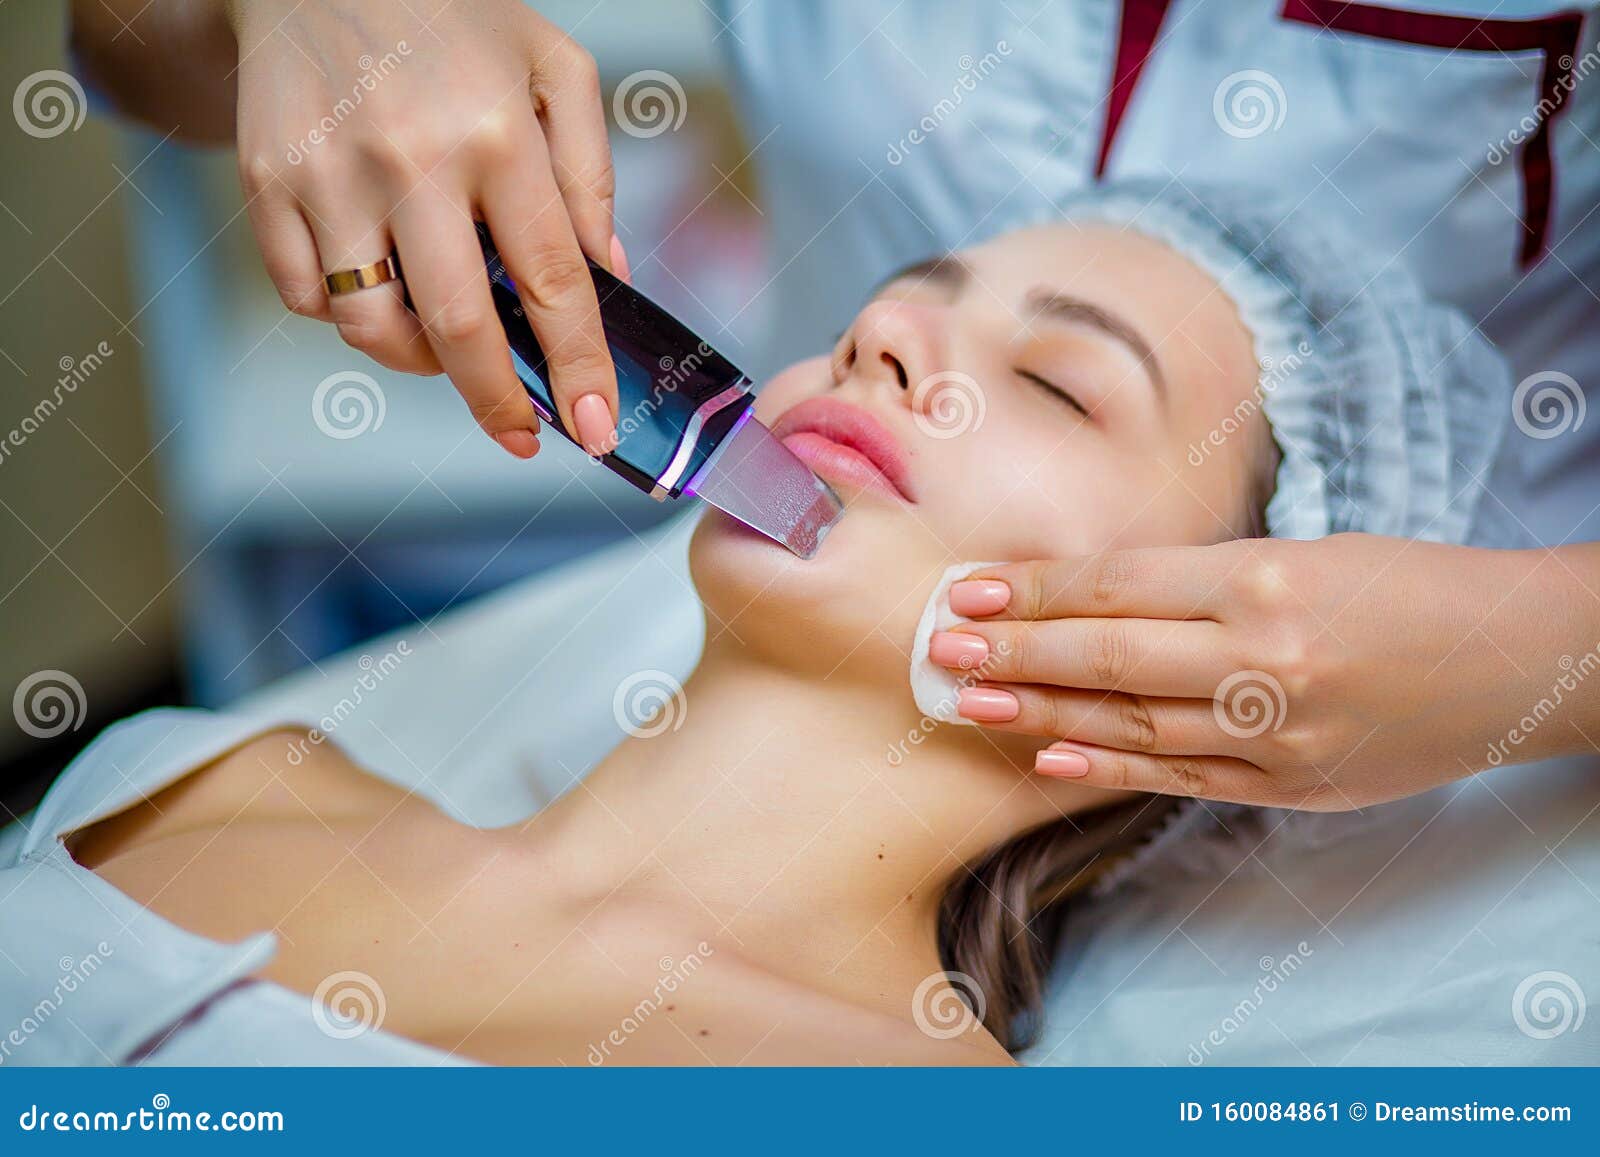 woman receiving ultrasonic facial exfoliation at cosmetology salon.